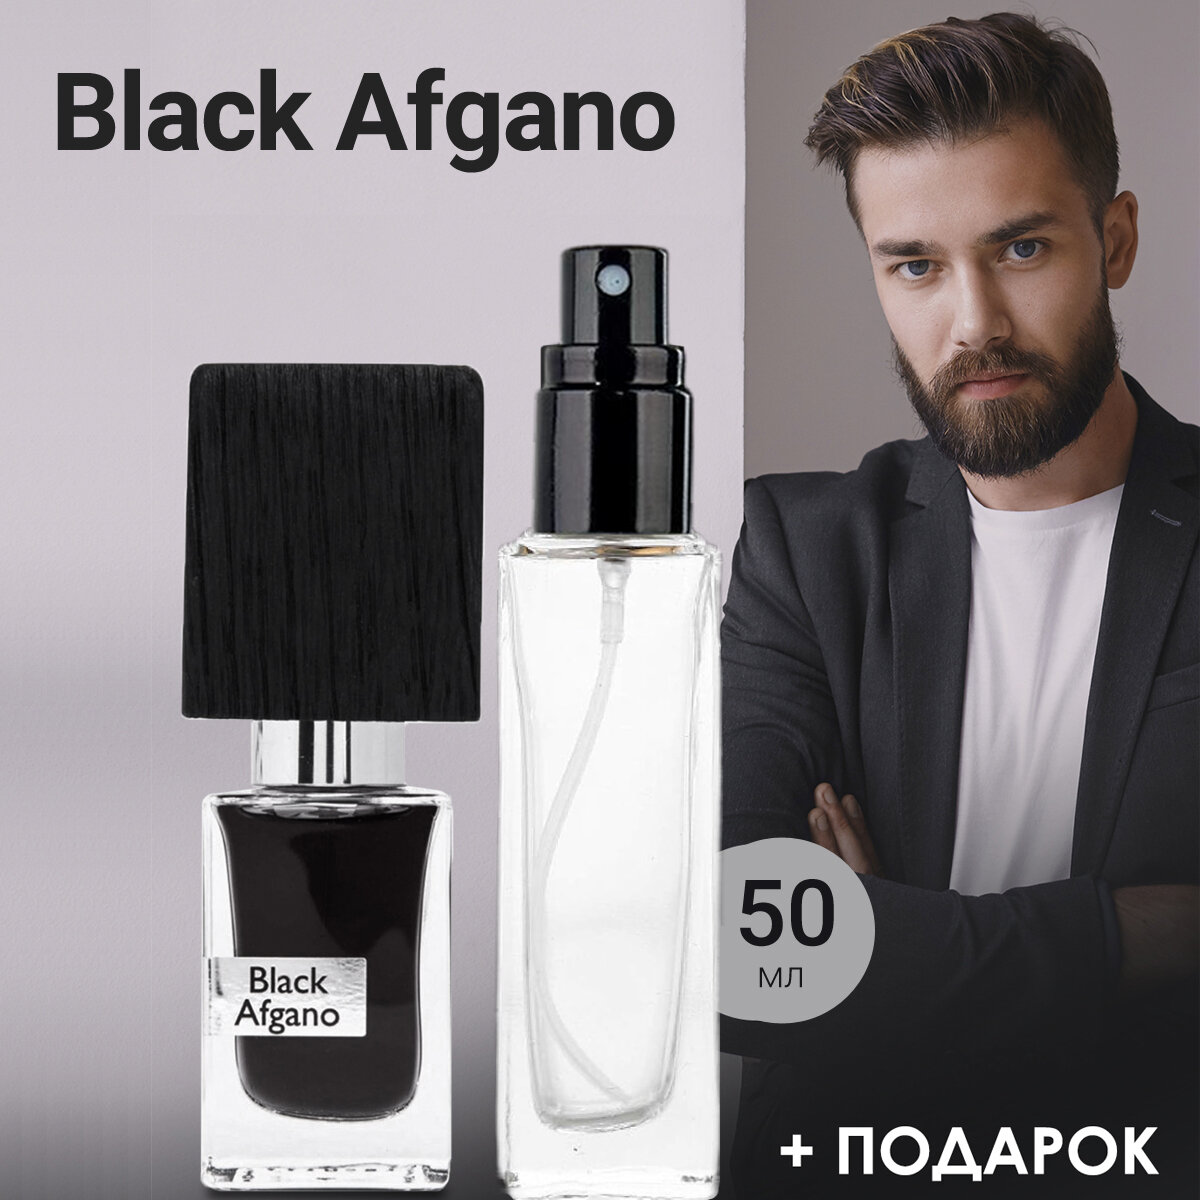 "Black Afgano" - Духи унисекс 50 мл + подарок 1 мл другого аромата